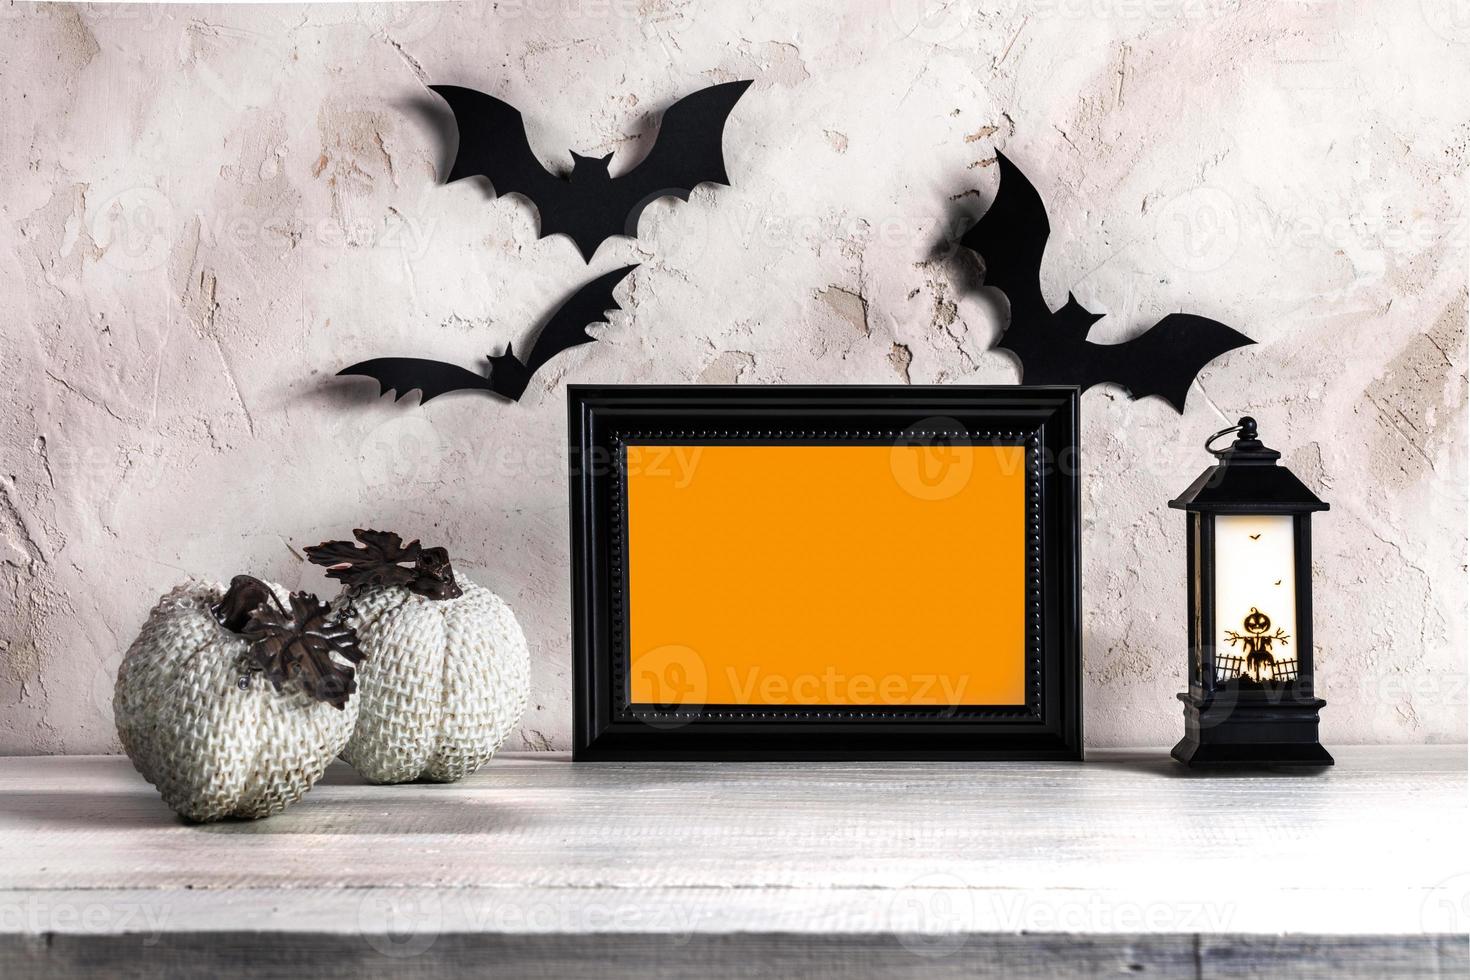 Hallowen decorations black frame with orange space for text, decorative pumpkins, bats, lantern. photo